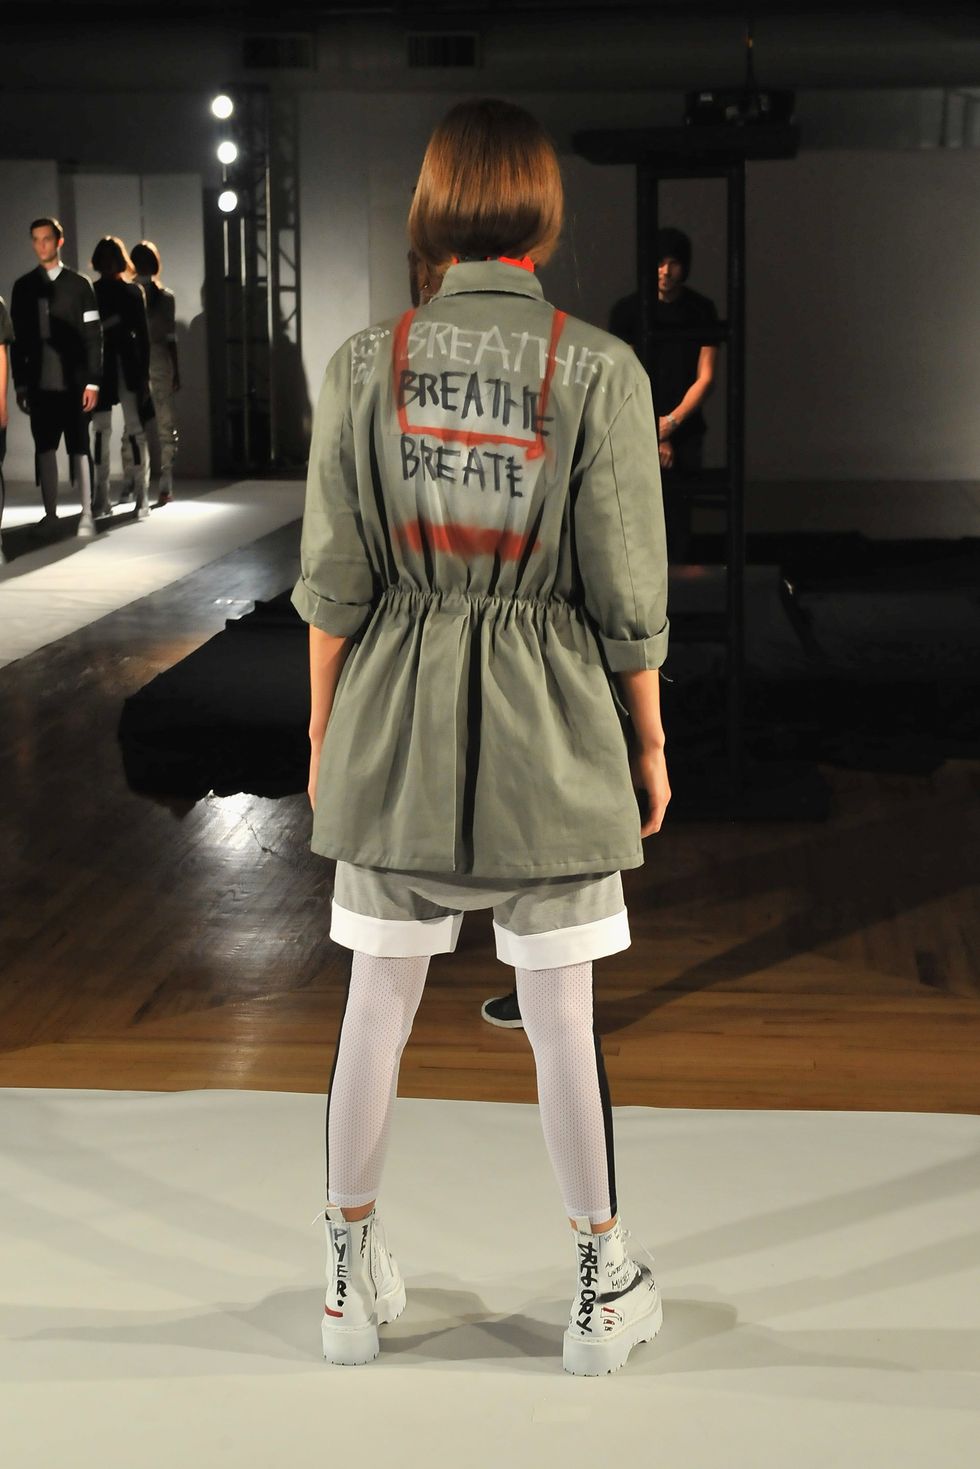 Pyer Moss's Kerby-Jean Raymond: Fashion's most political designer